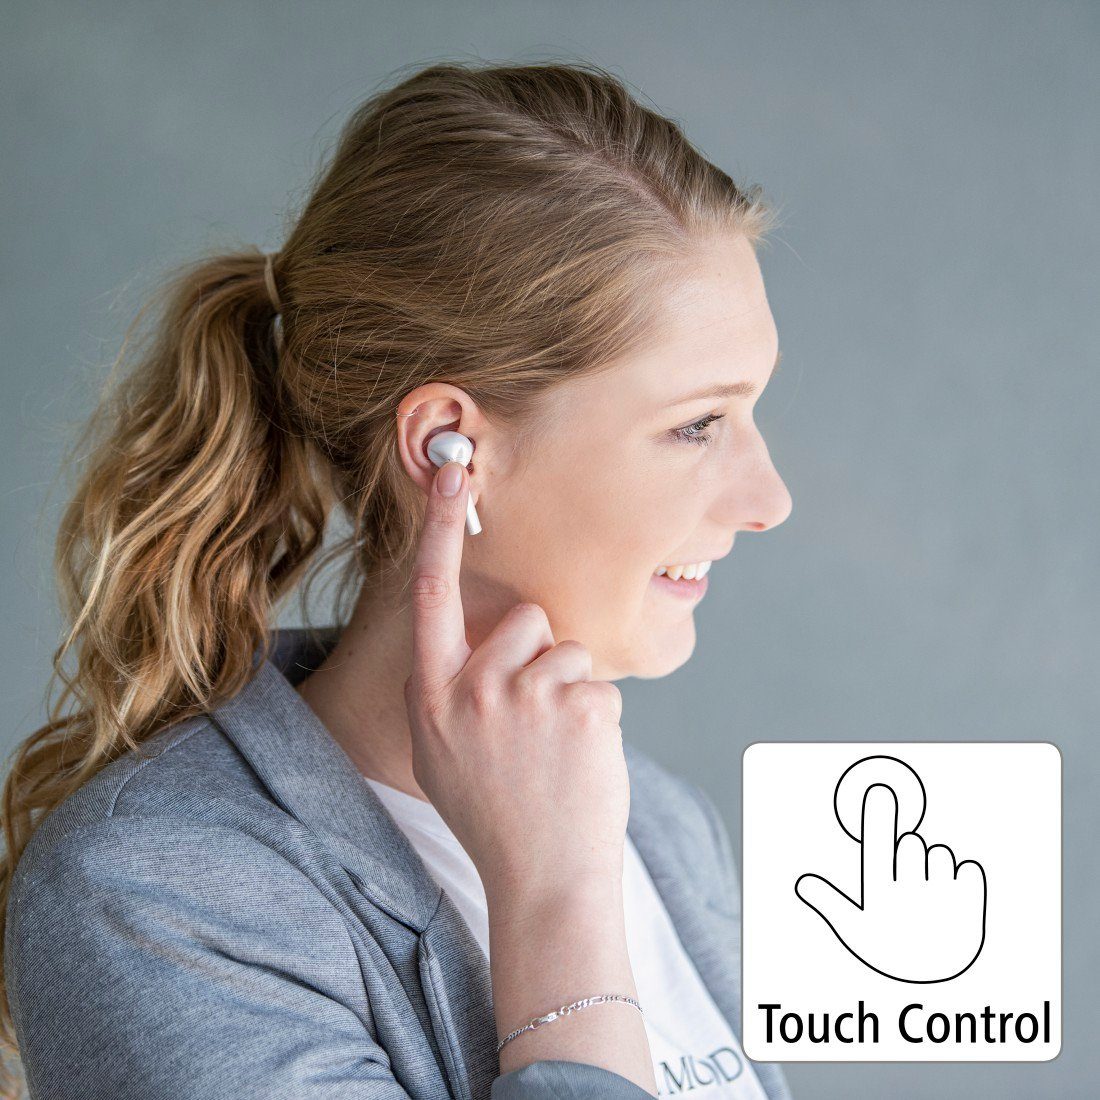 Hama Bluetooth® Sprachassistenten Kopfhörer Ladebox In Bluetooth, Google Berührungssteuerung, Siri Siri, True (Sprachsteuerung, Wireless, Assistant, In-Ear-Kopfhörer und Bluetooth, USB-C Anschluss, Assistant) A2DP HFP, AVRCP Google weiß HSP, Ear